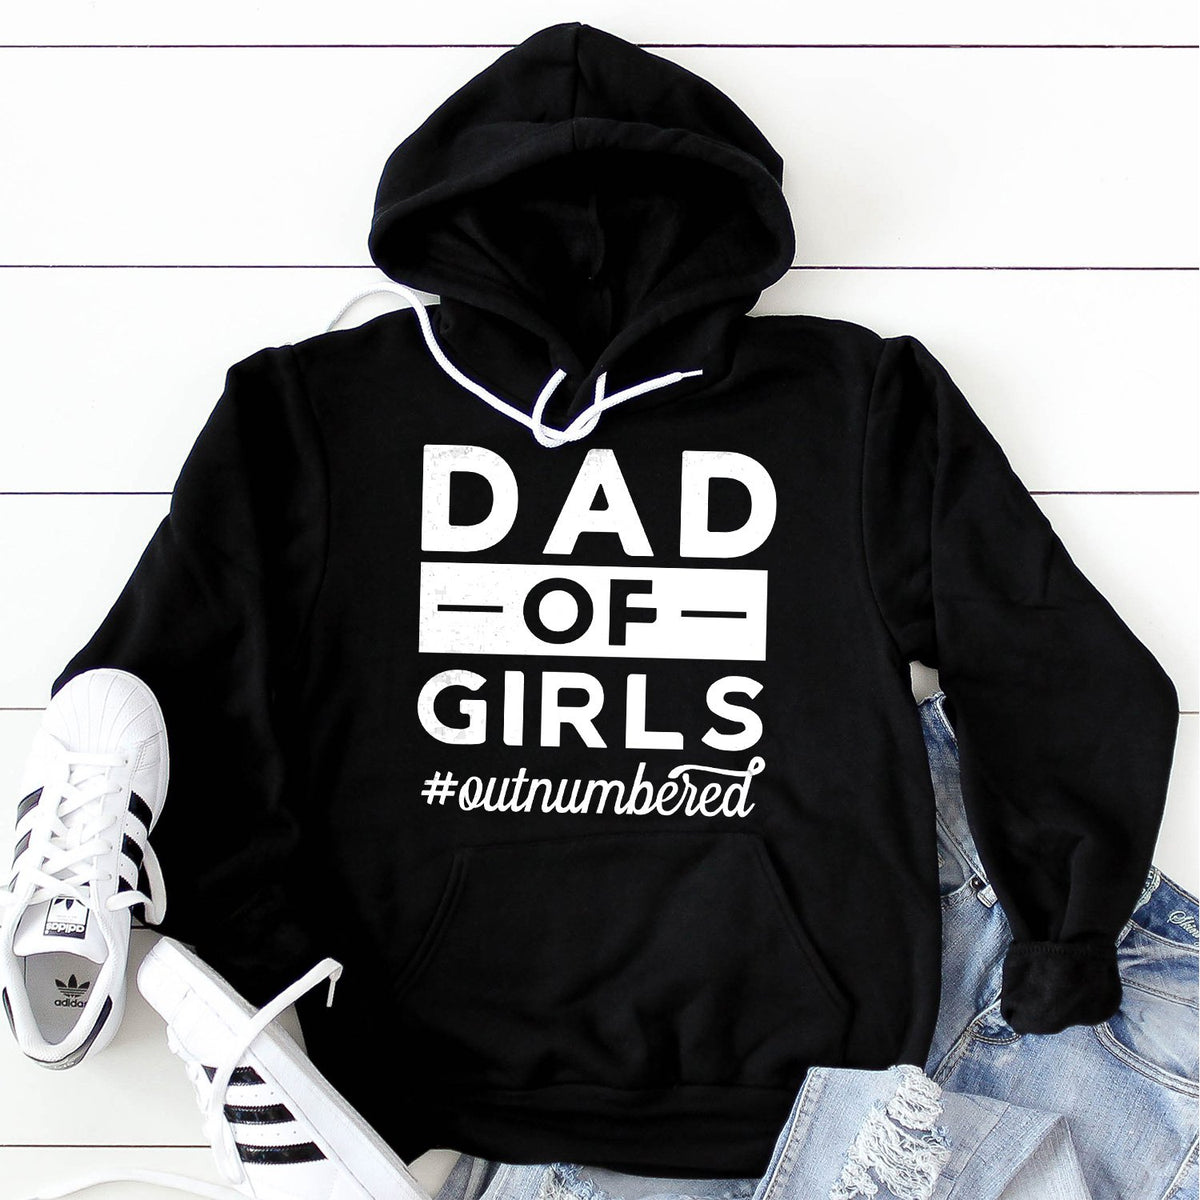 Dad Of Girls Outnumbered - Hoodie Sweatshirt